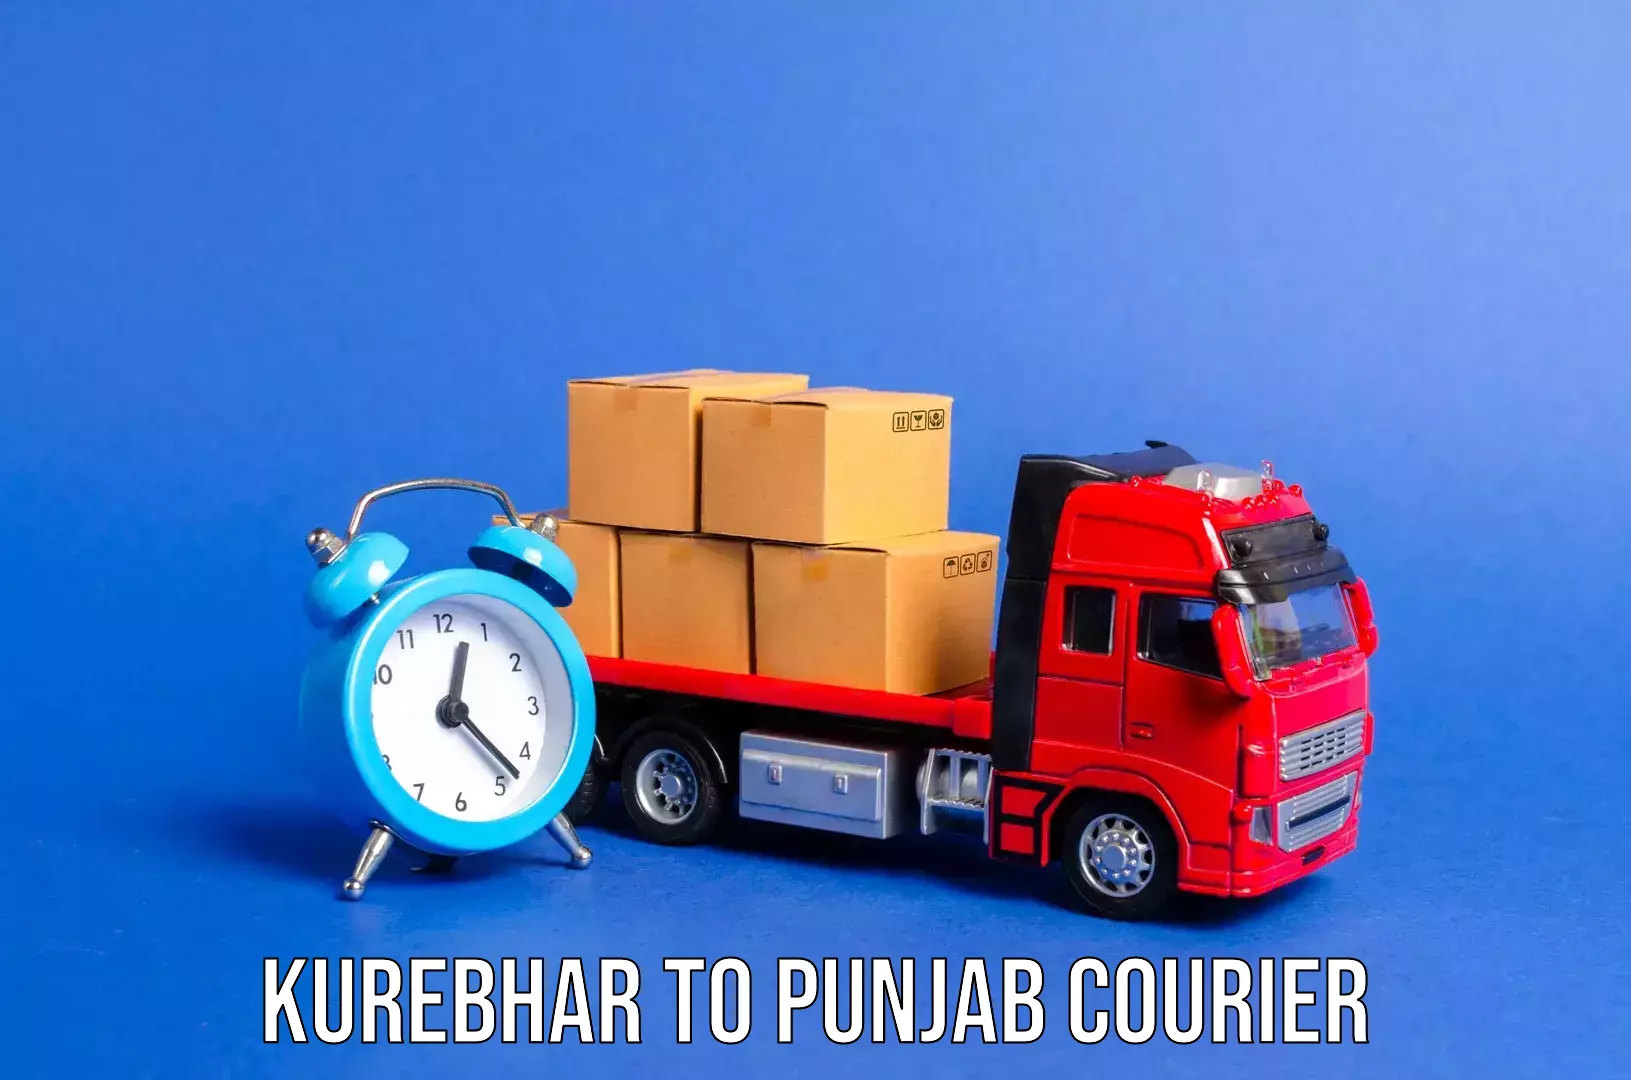 Luggage shipment tracking Kurebhar to Punjab